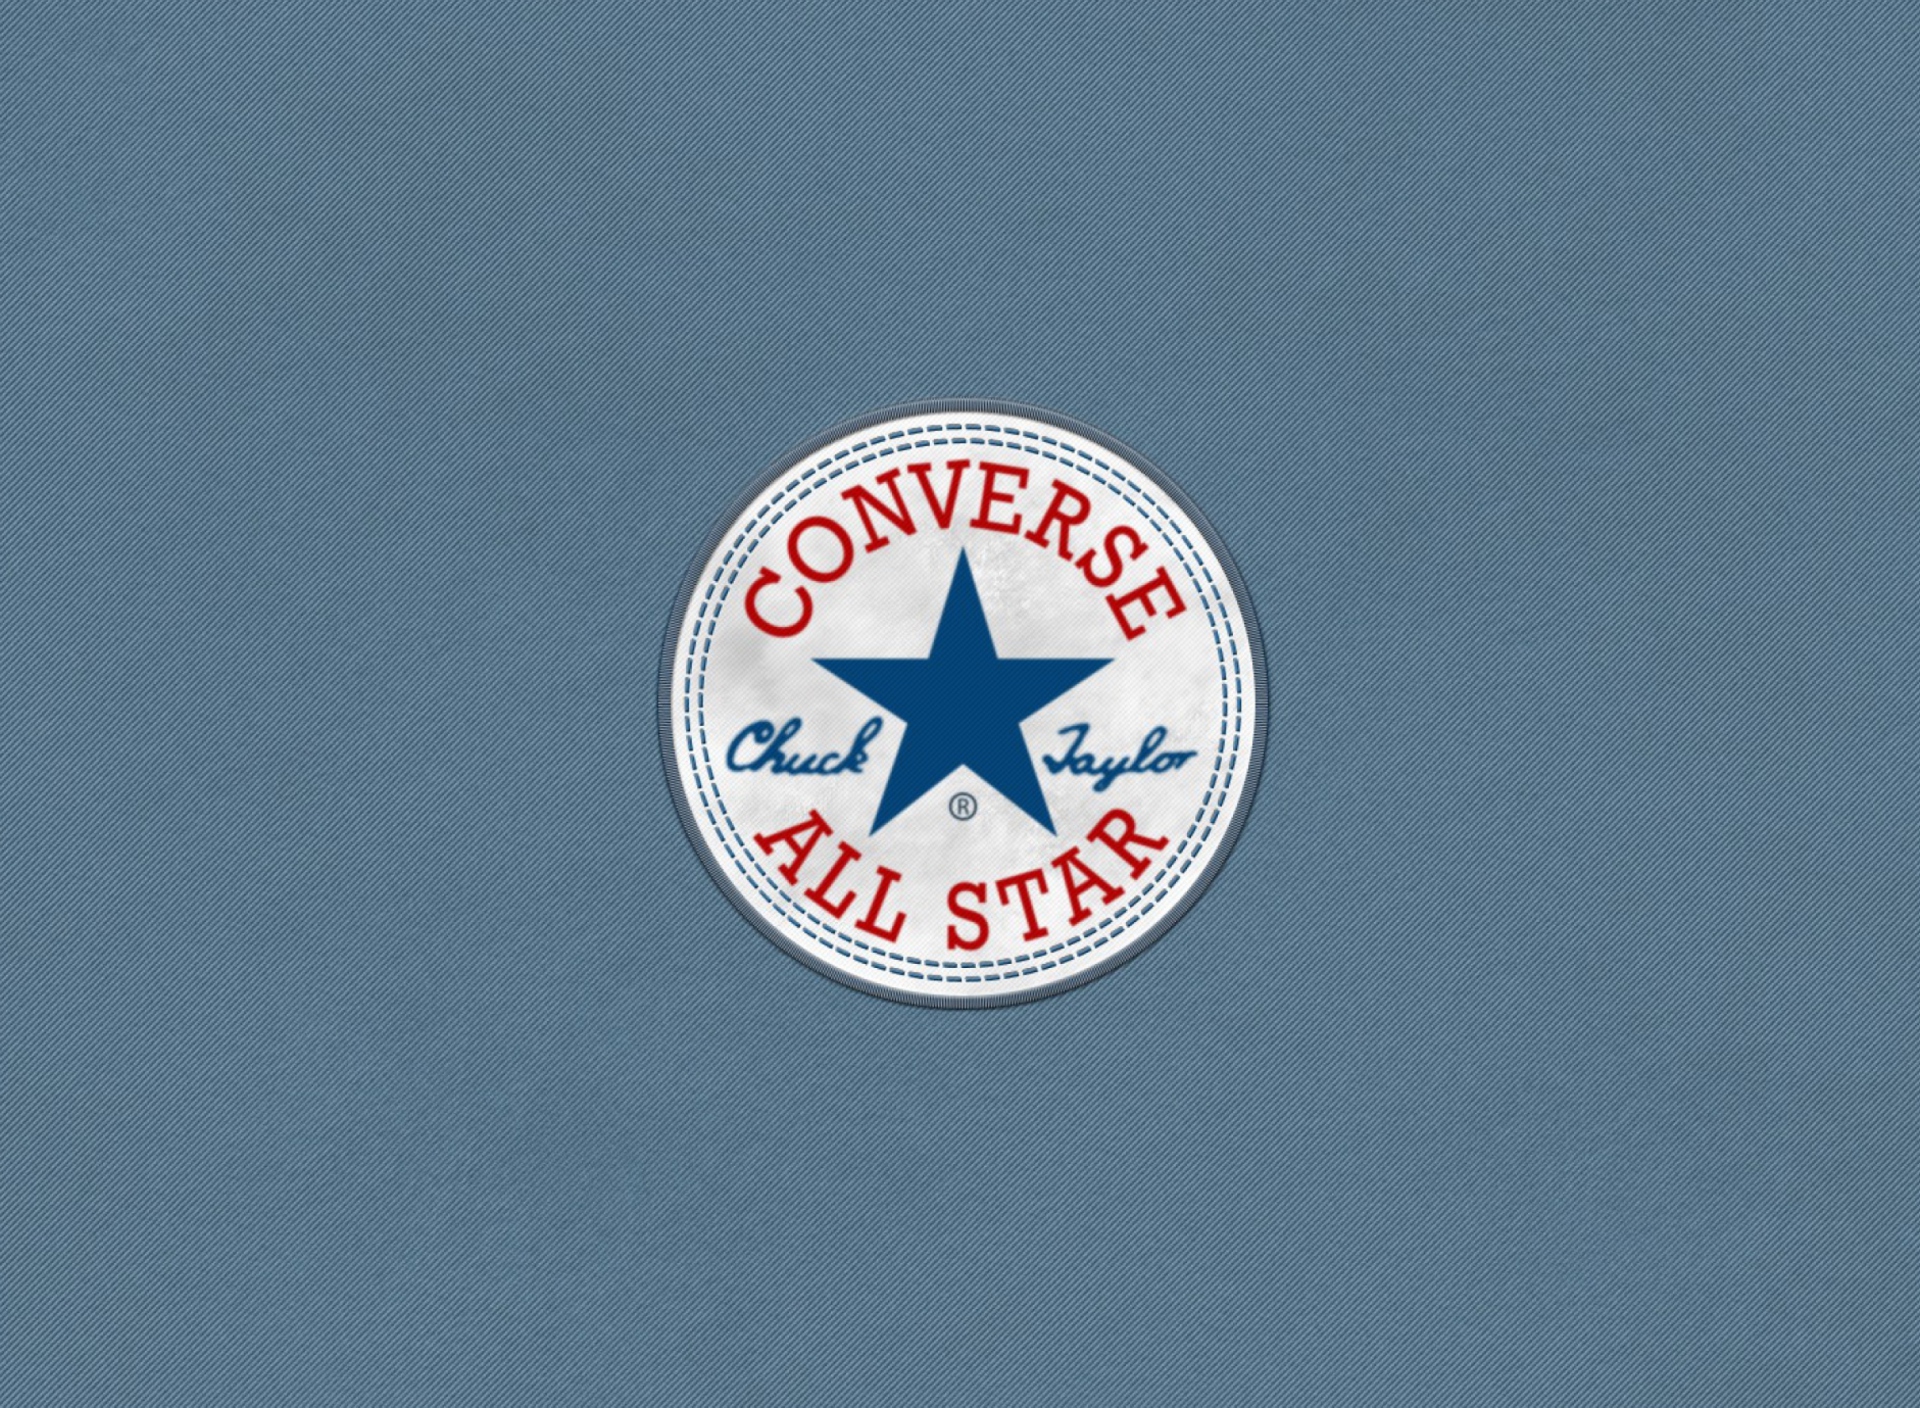 Converse All Stars wallpaper 1920x1408